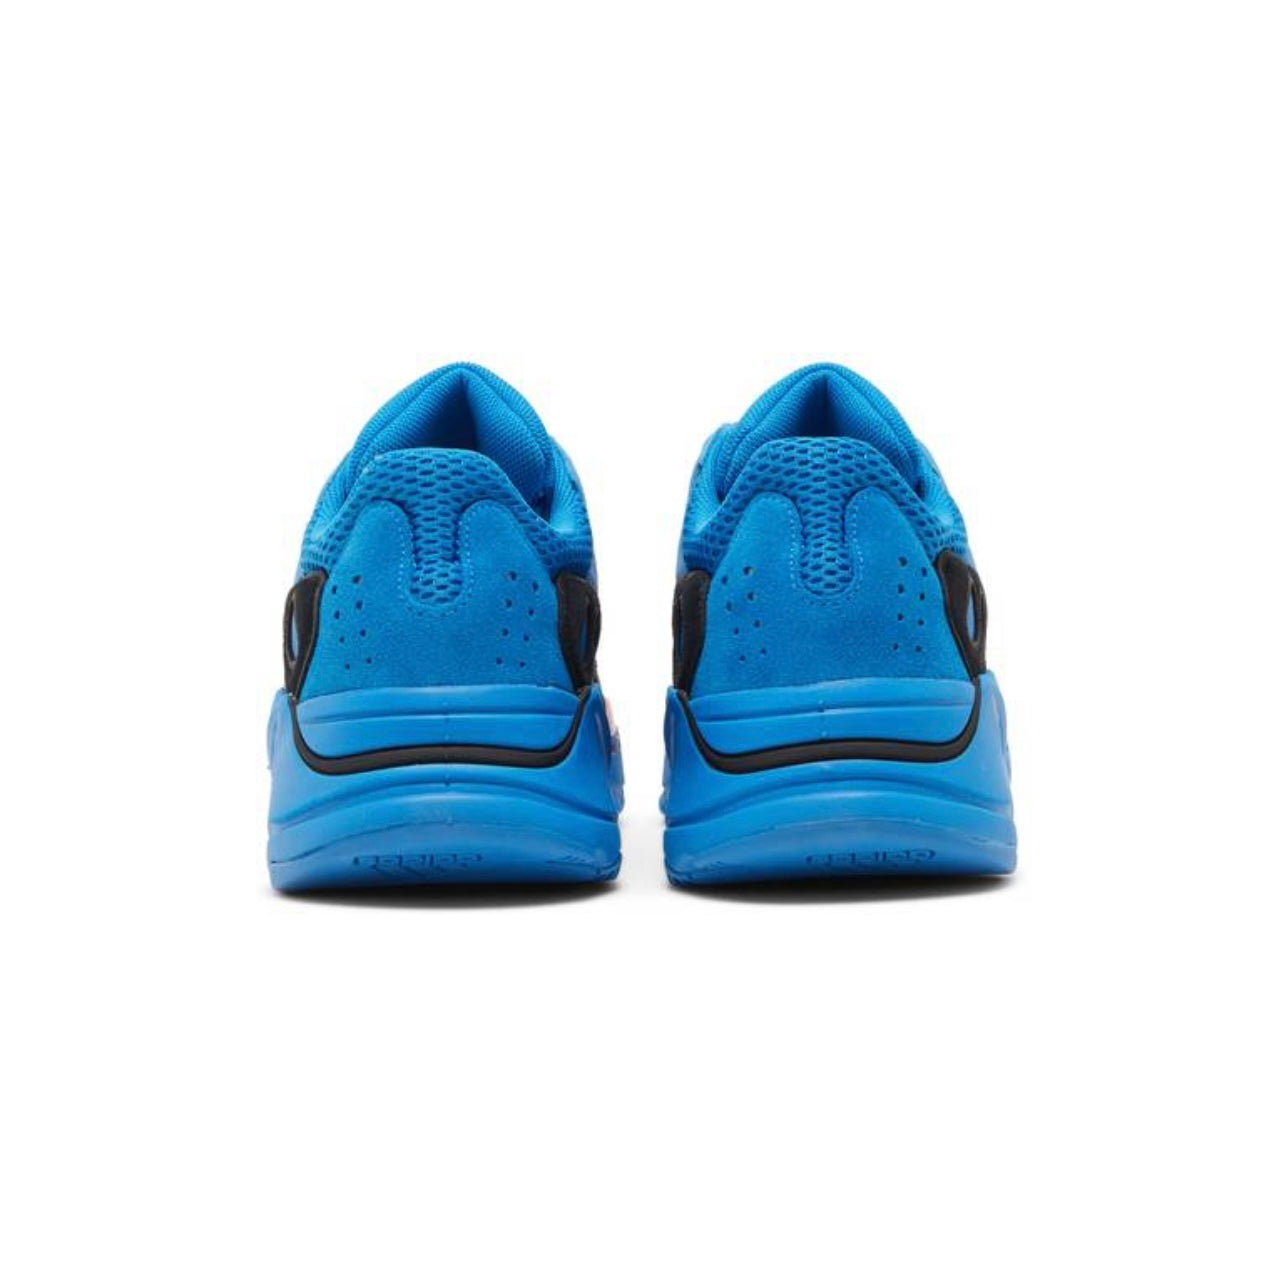 Adidas Yeezy Boost 700 "Hi-Res Blue"